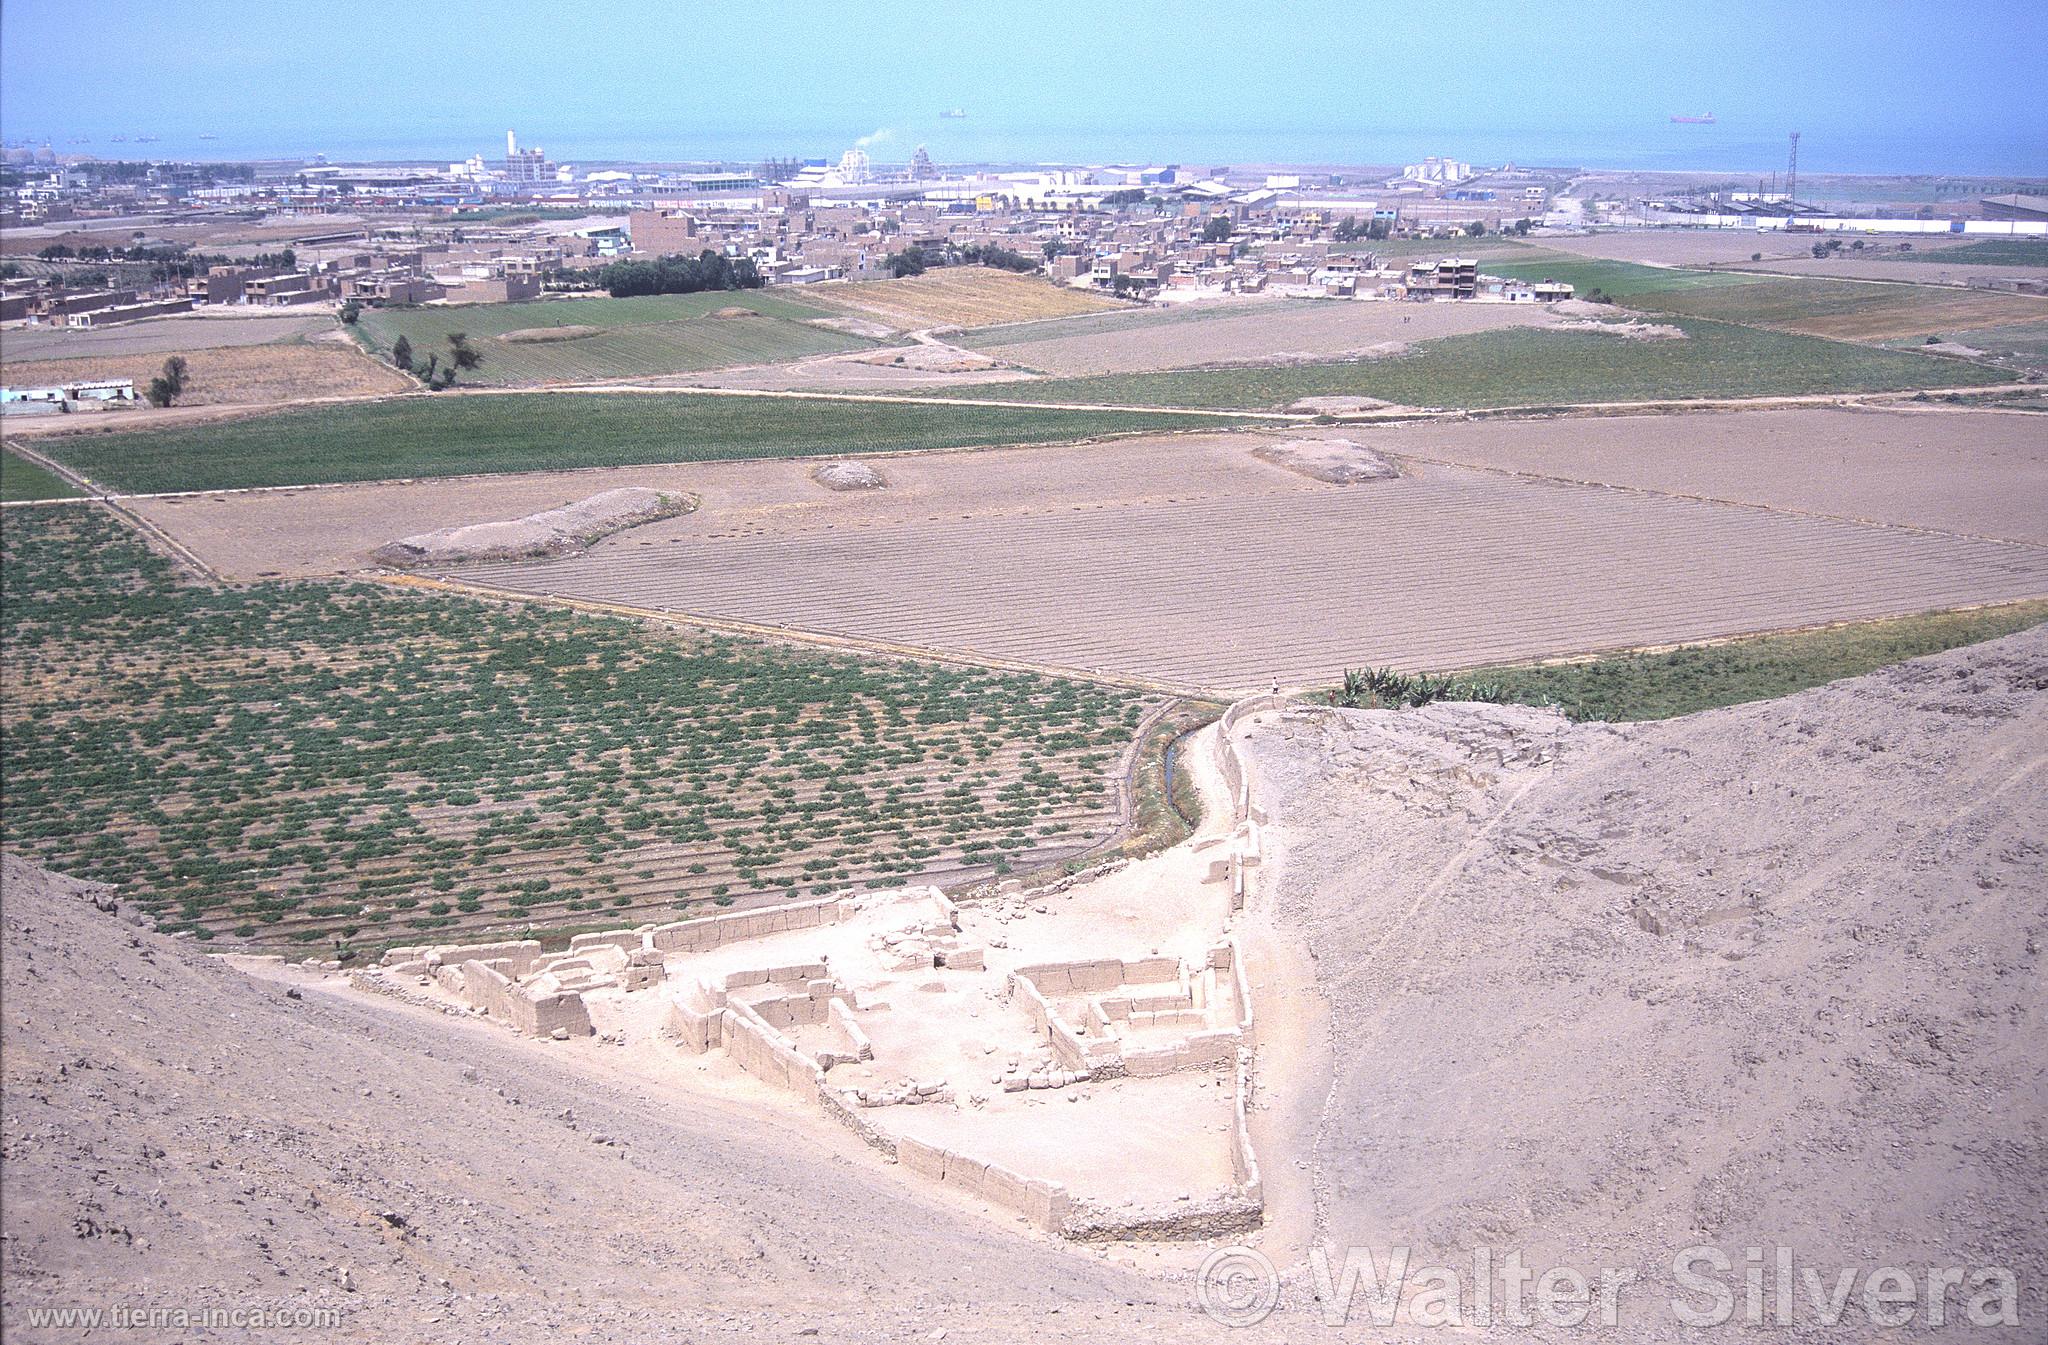 Sitio arqueológico Fundo Oquendo